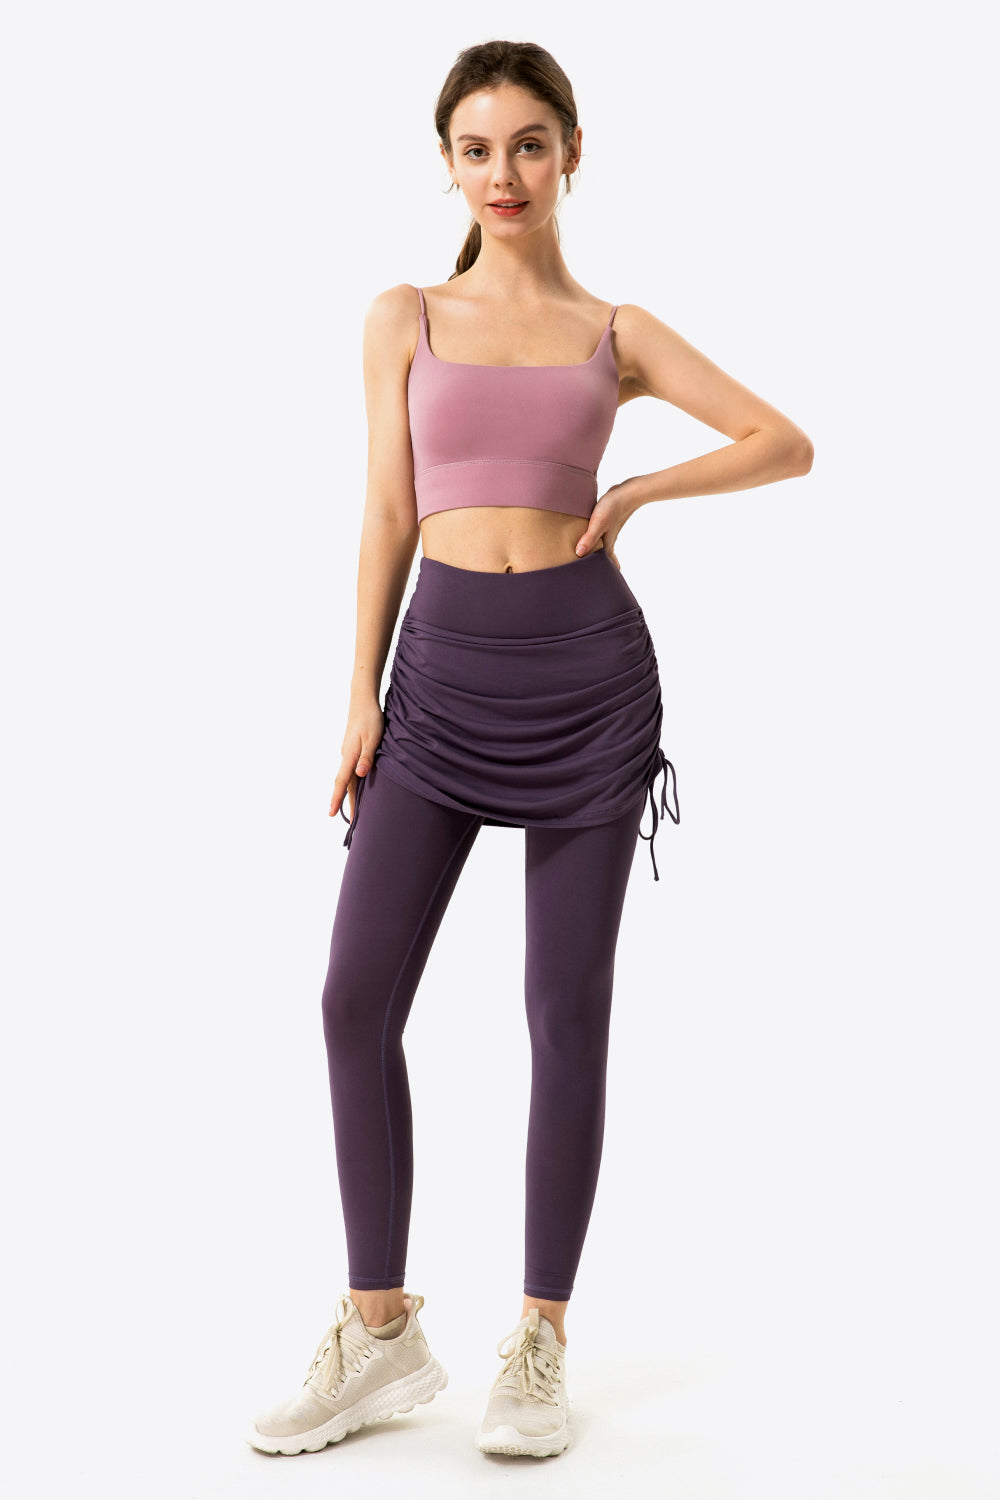 Drawstring Ruched Faux Layered Yoga Leggings  | KIKI COUTURE-Women's Clothing, Designer Fashions, Shoes, Bags